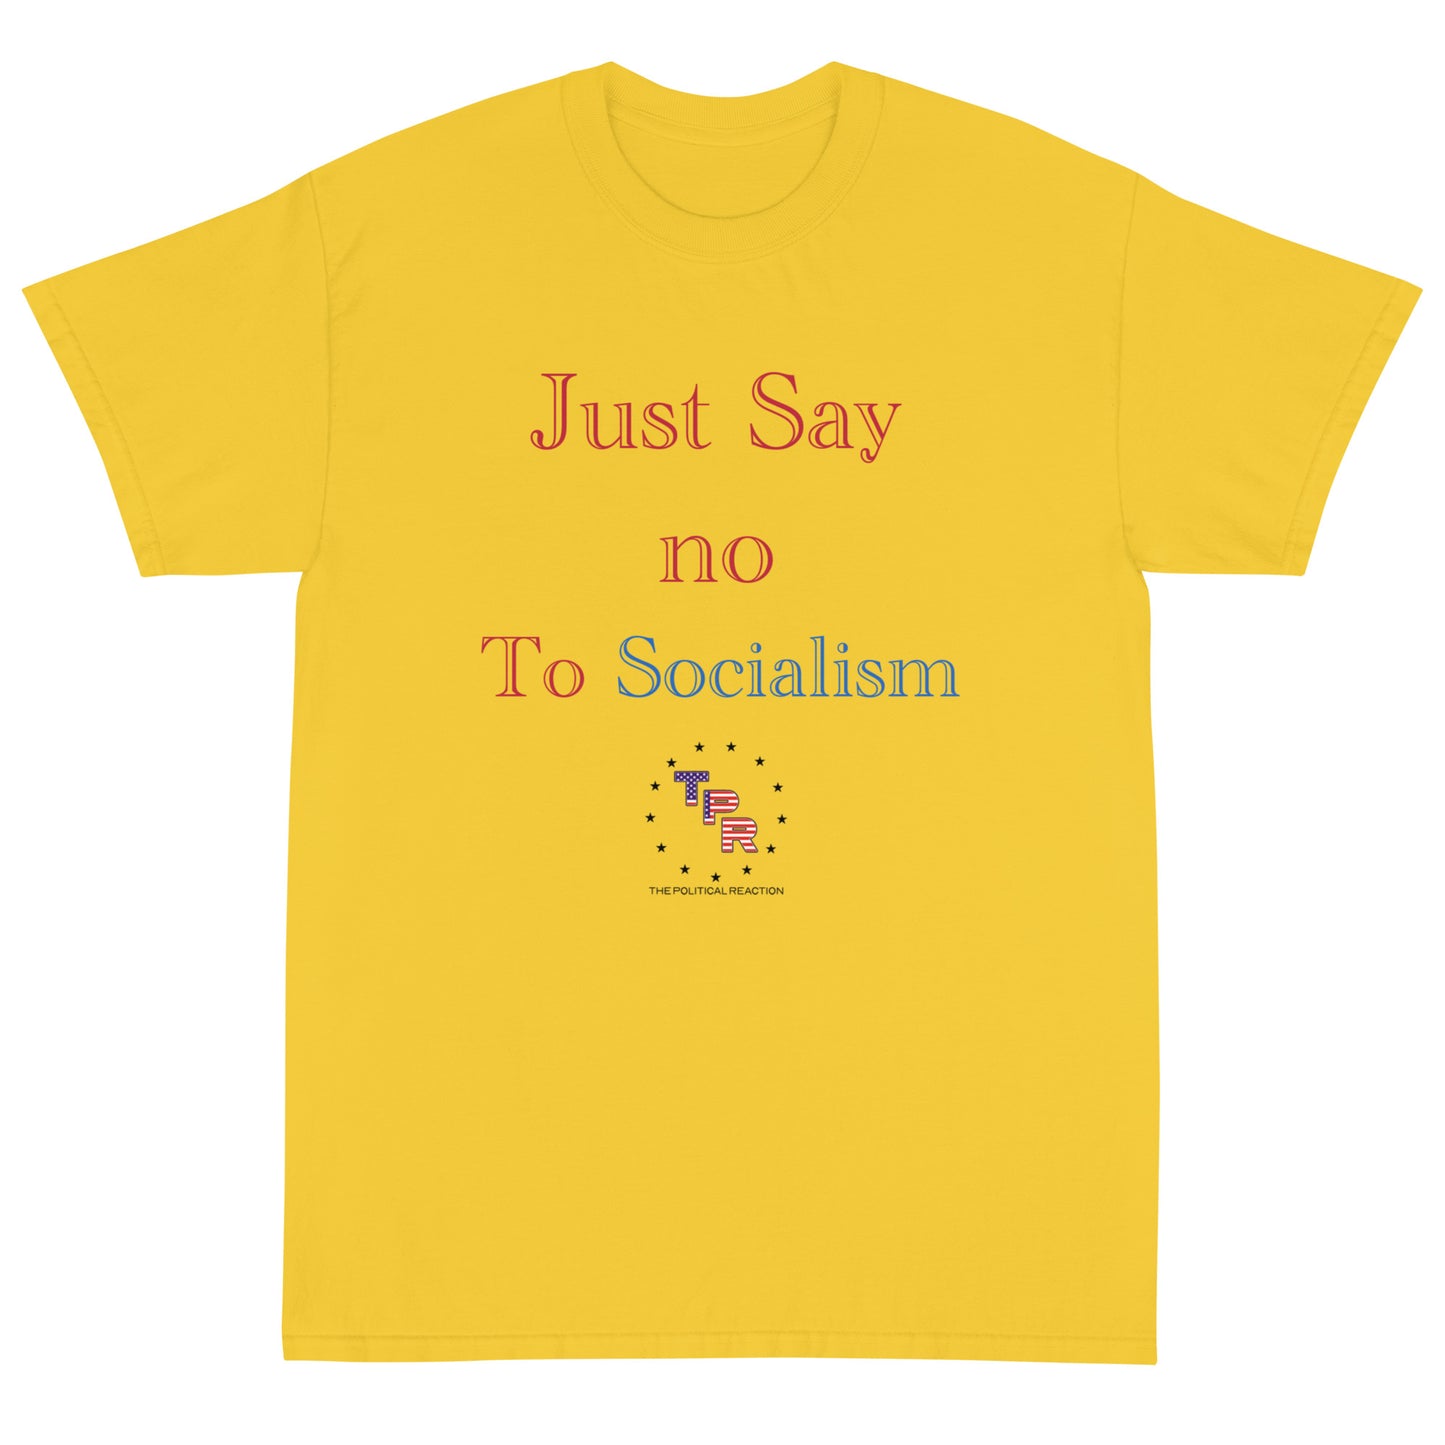 Just-say-no-to-socialism-t-shirt-Yellow